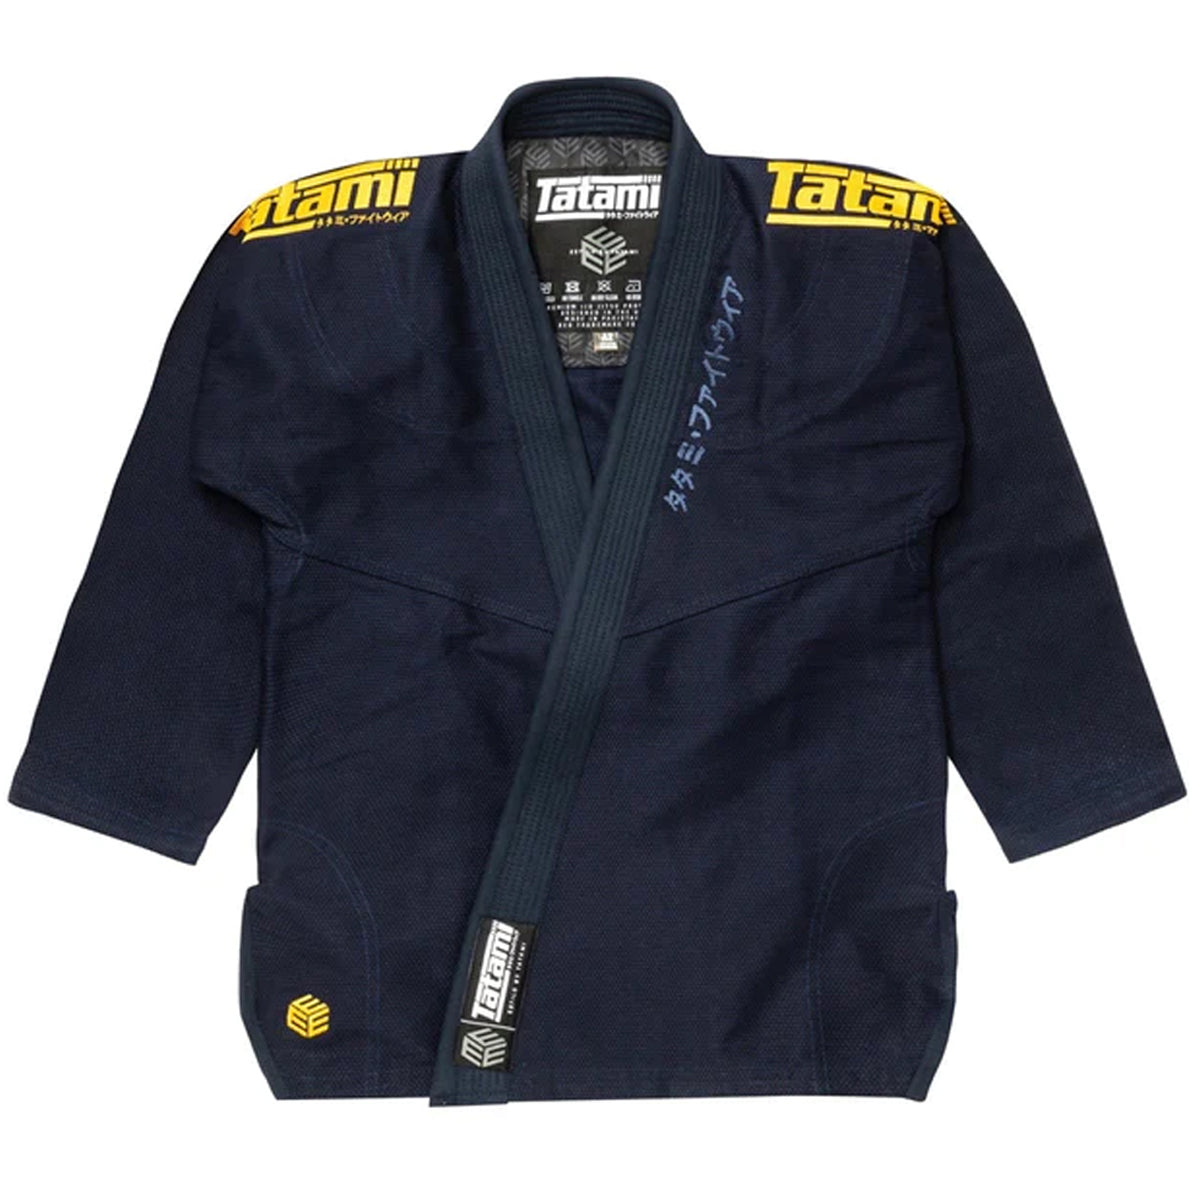 Tatami Fightwear Estilo Black Label BJJ Gi - Gold/Navy Tatami Fightwear